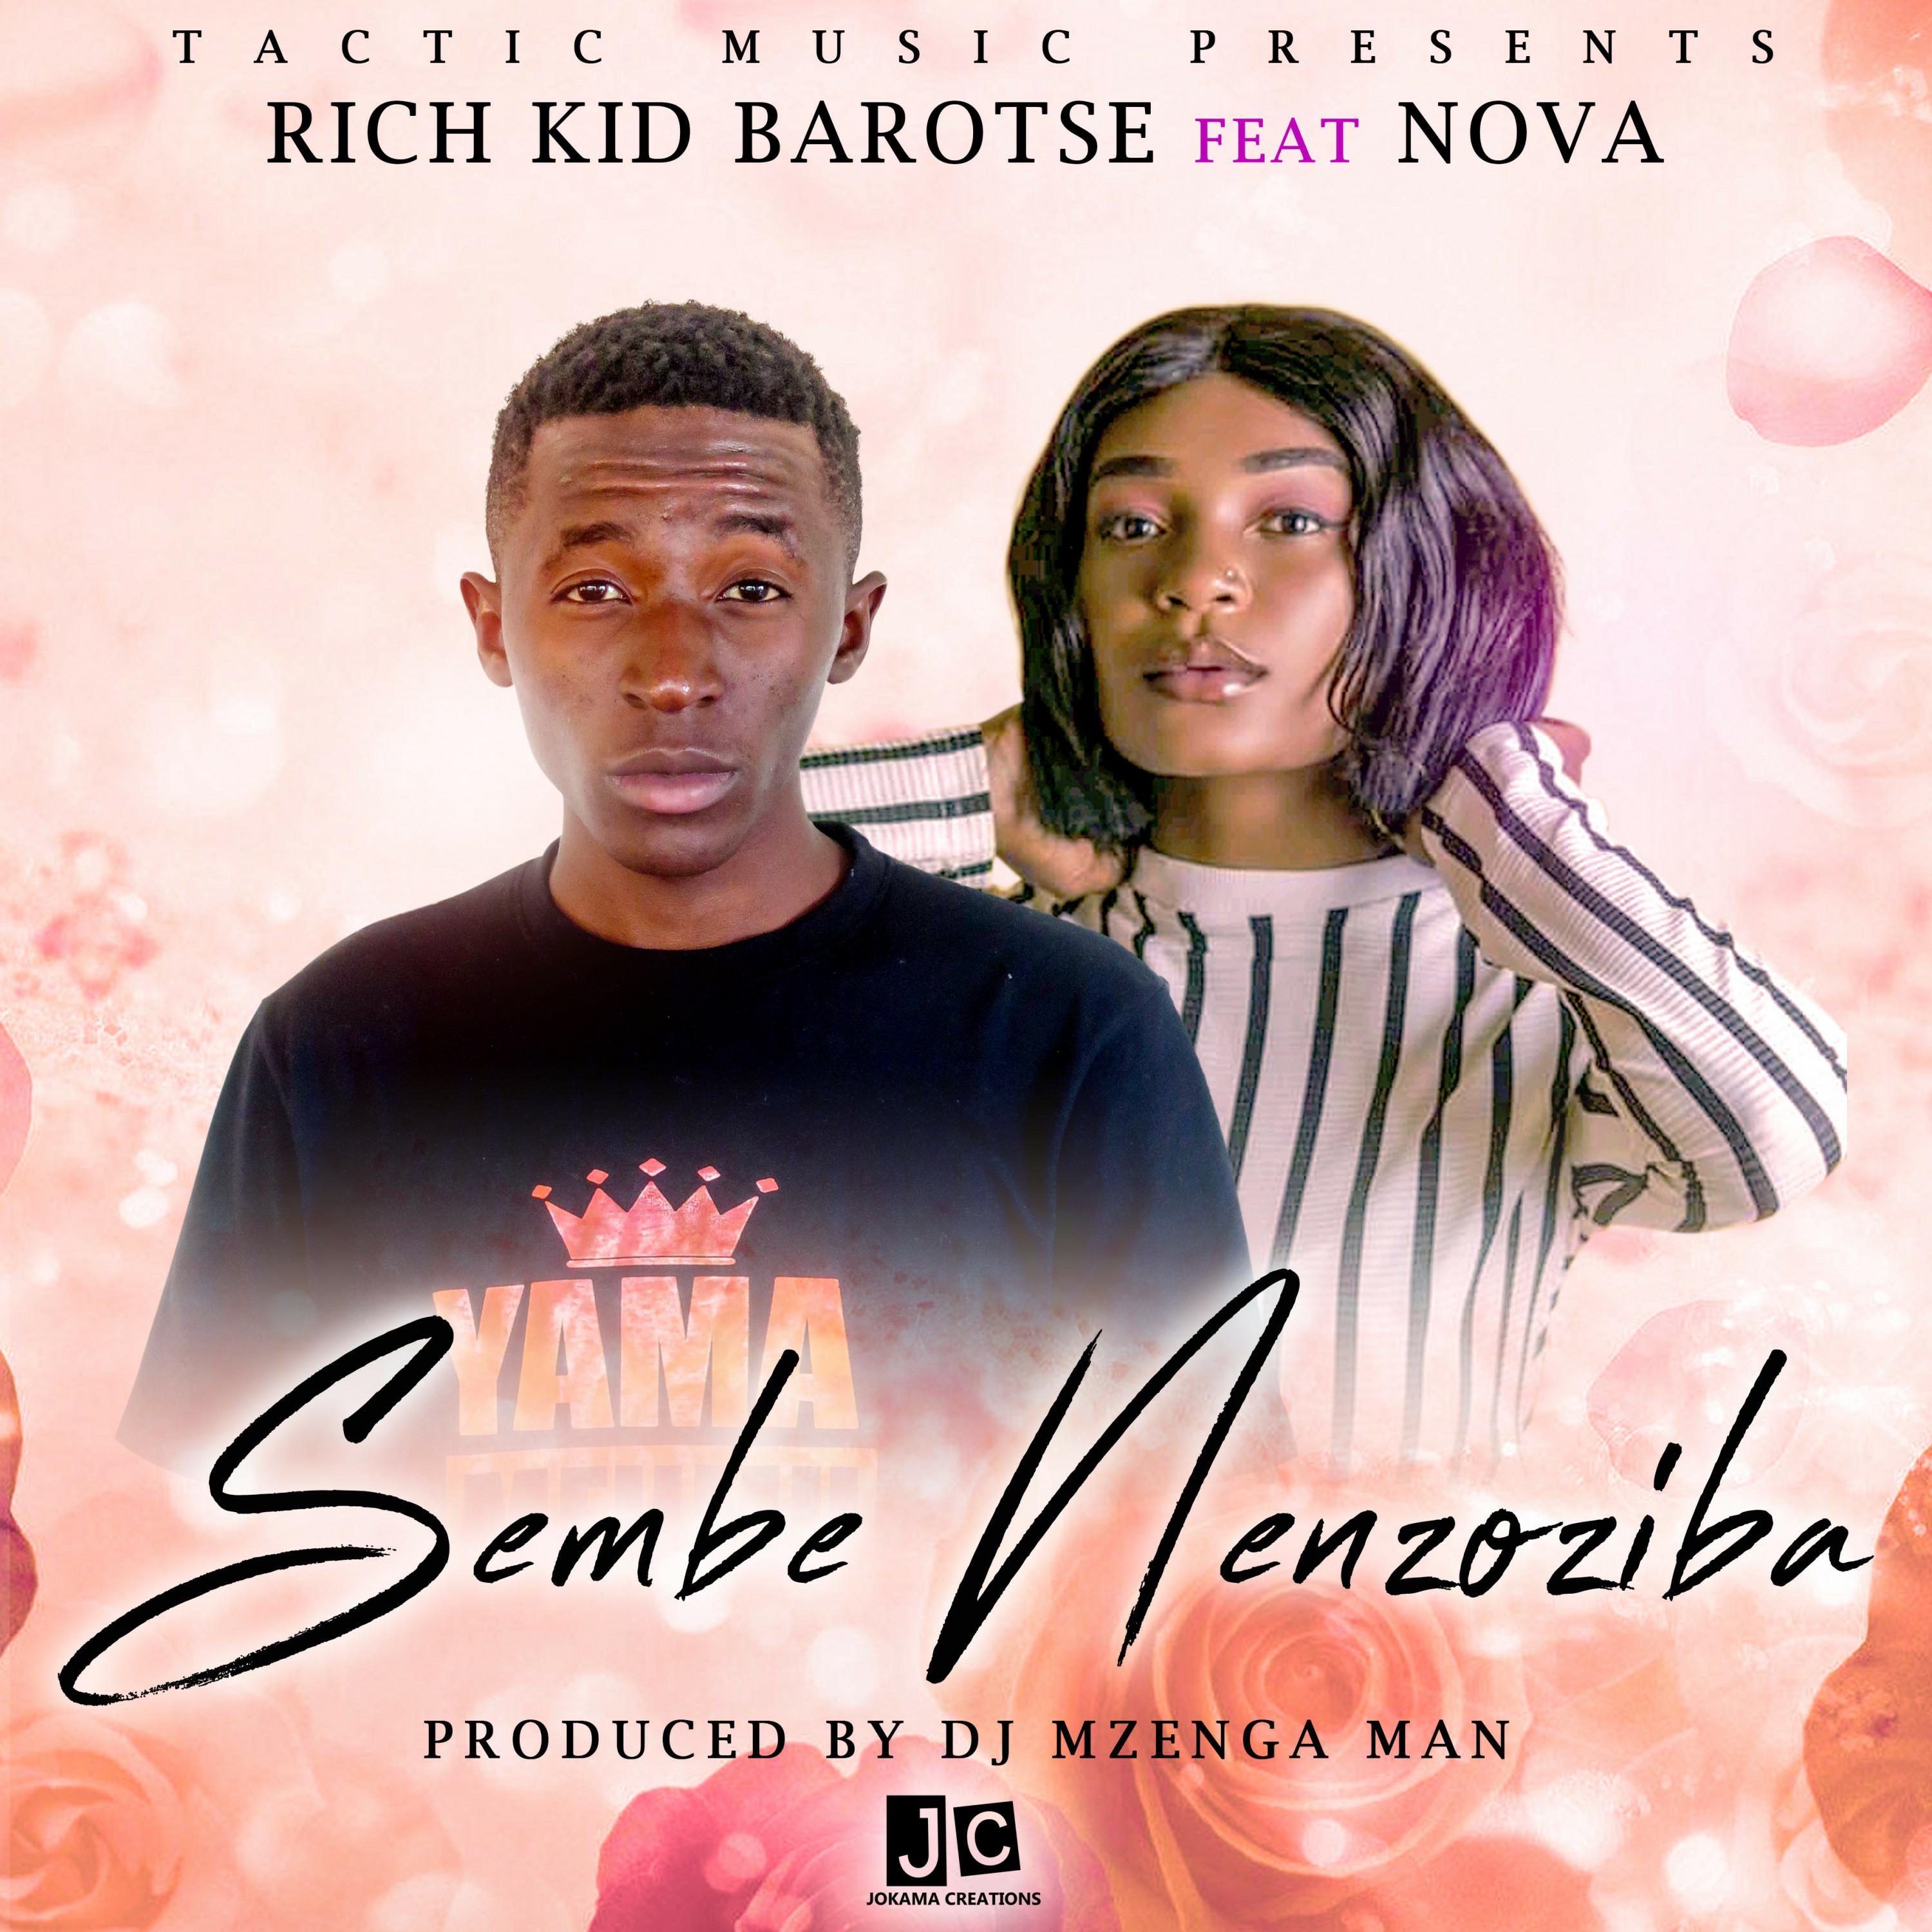 Rich Kid Barotse - Sembe Nenzoziba